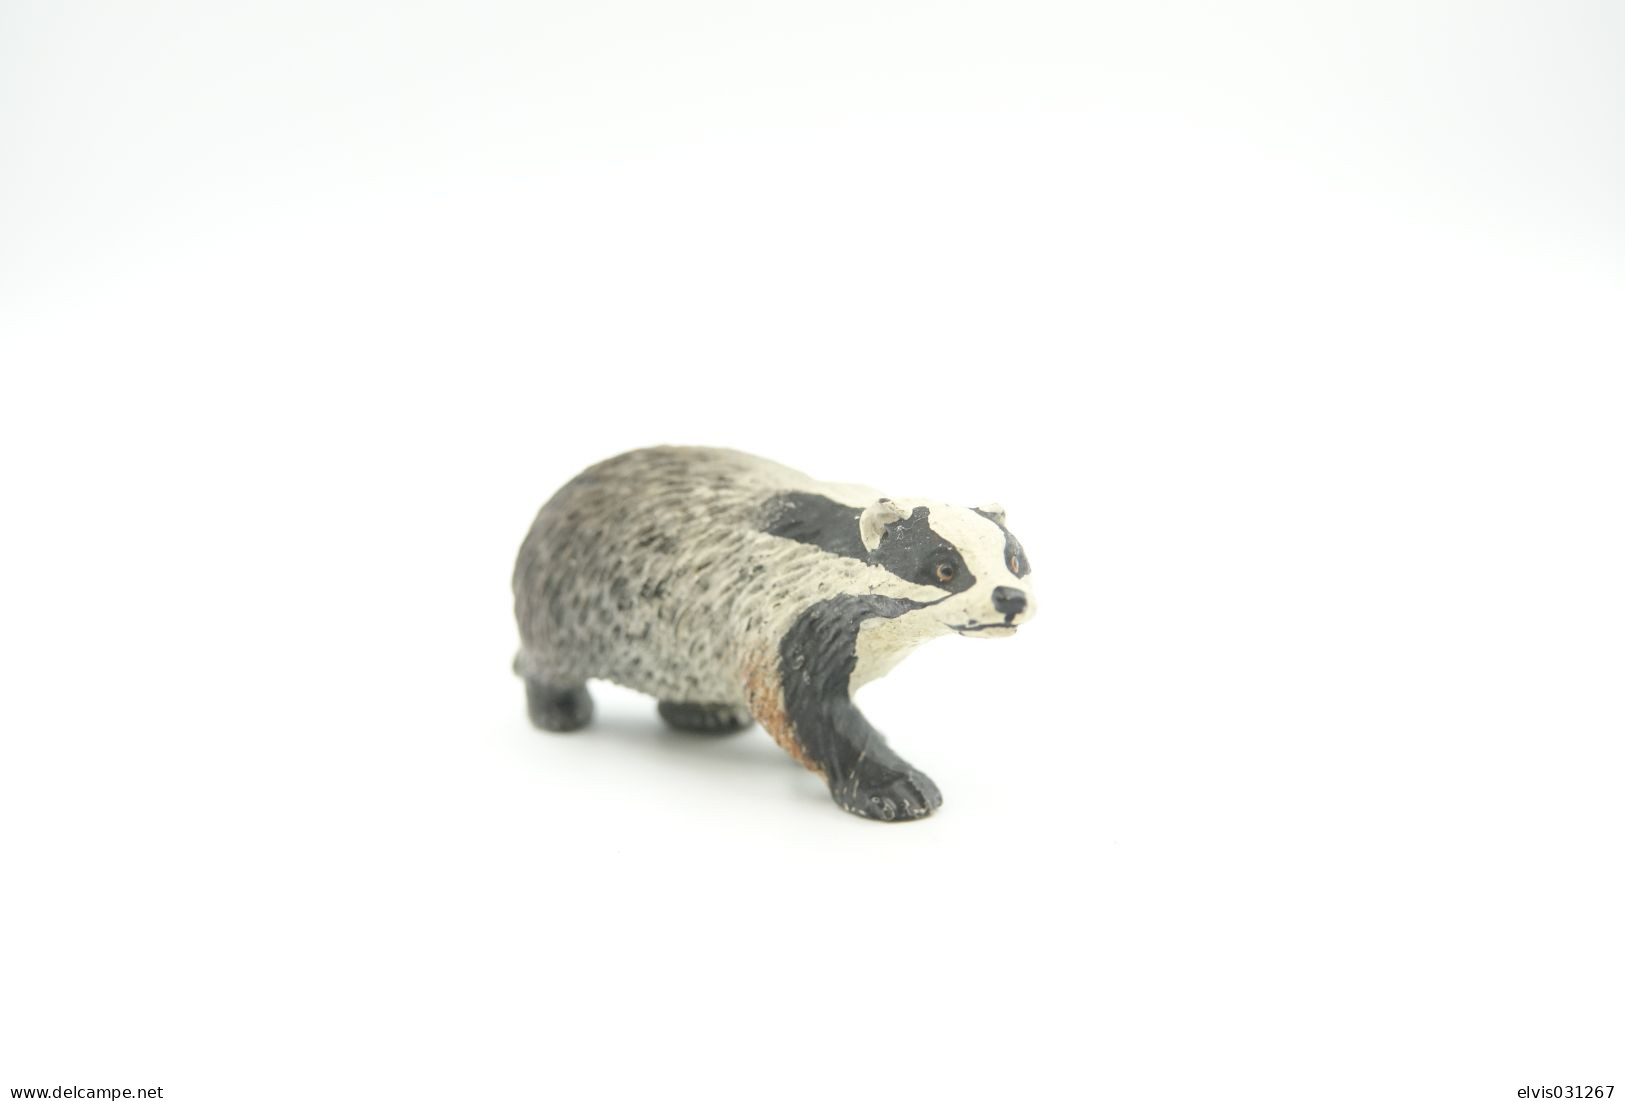 Elastolin, Lineol Hauser, Animals Badger N°6308, Vintage Toy 1930's - Figurines